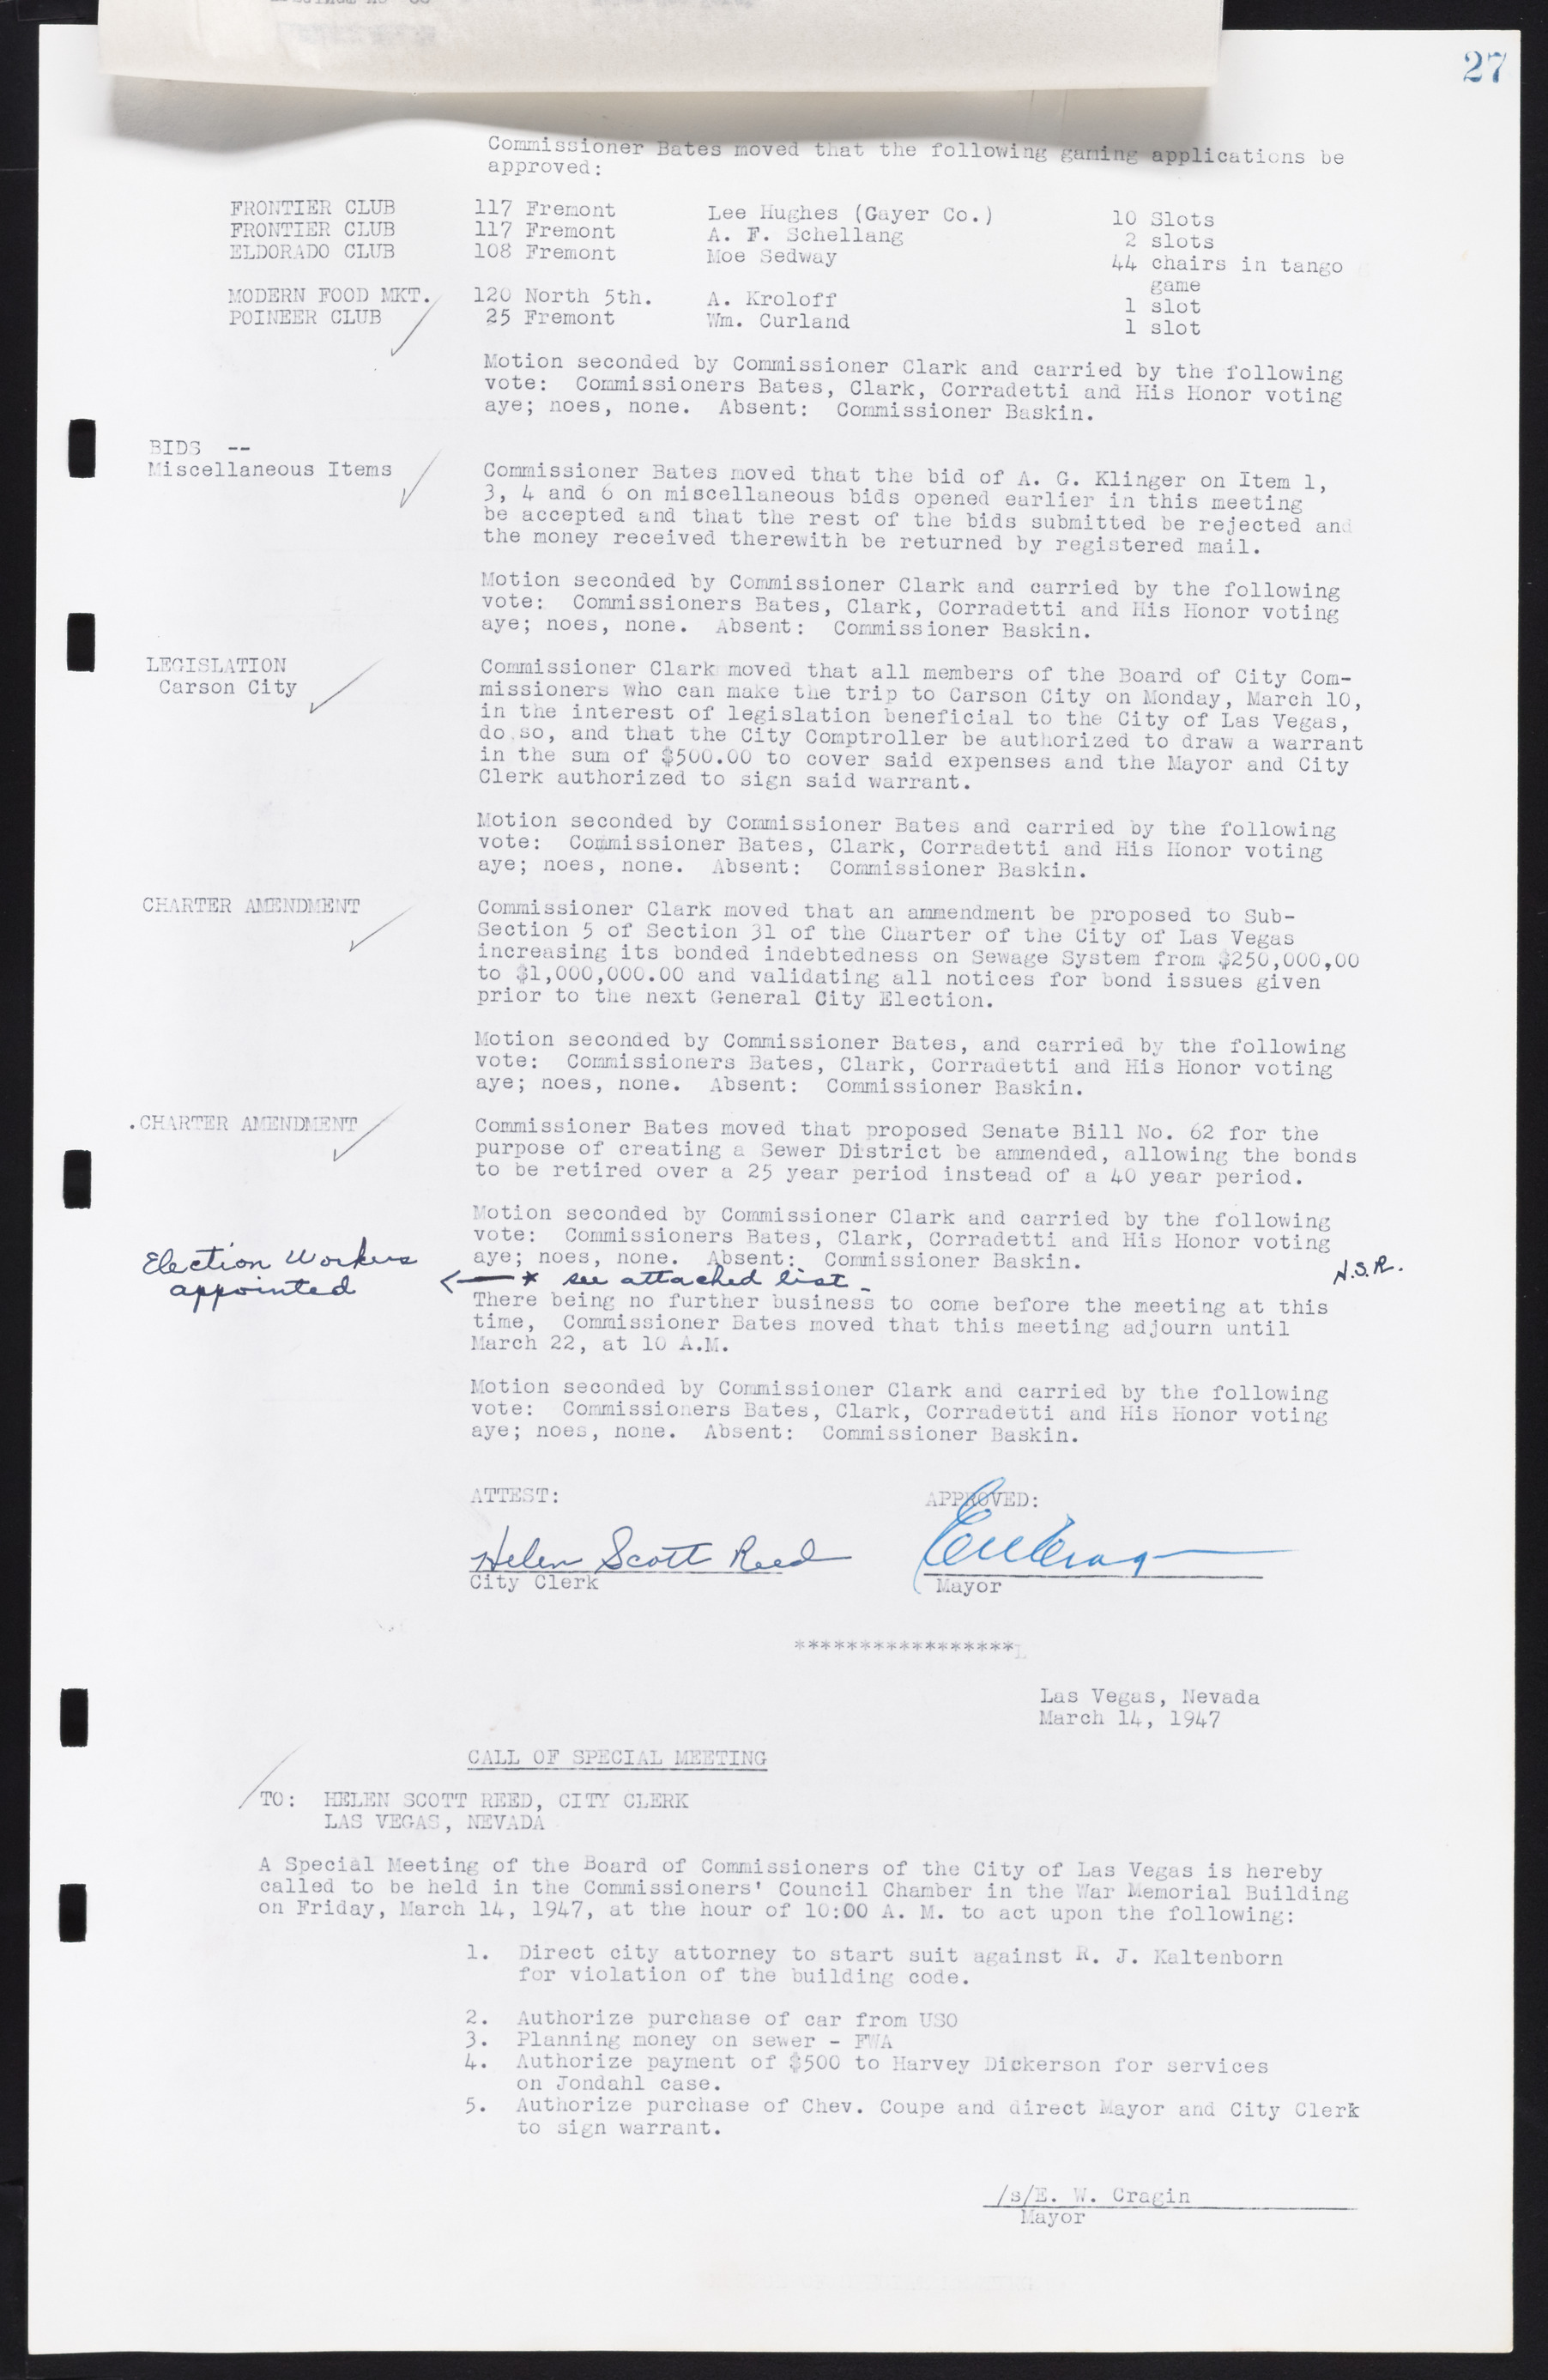 Las Vegas City Commission Minutes, January 7, 1947 to October 26, 1949, lvc000006-42